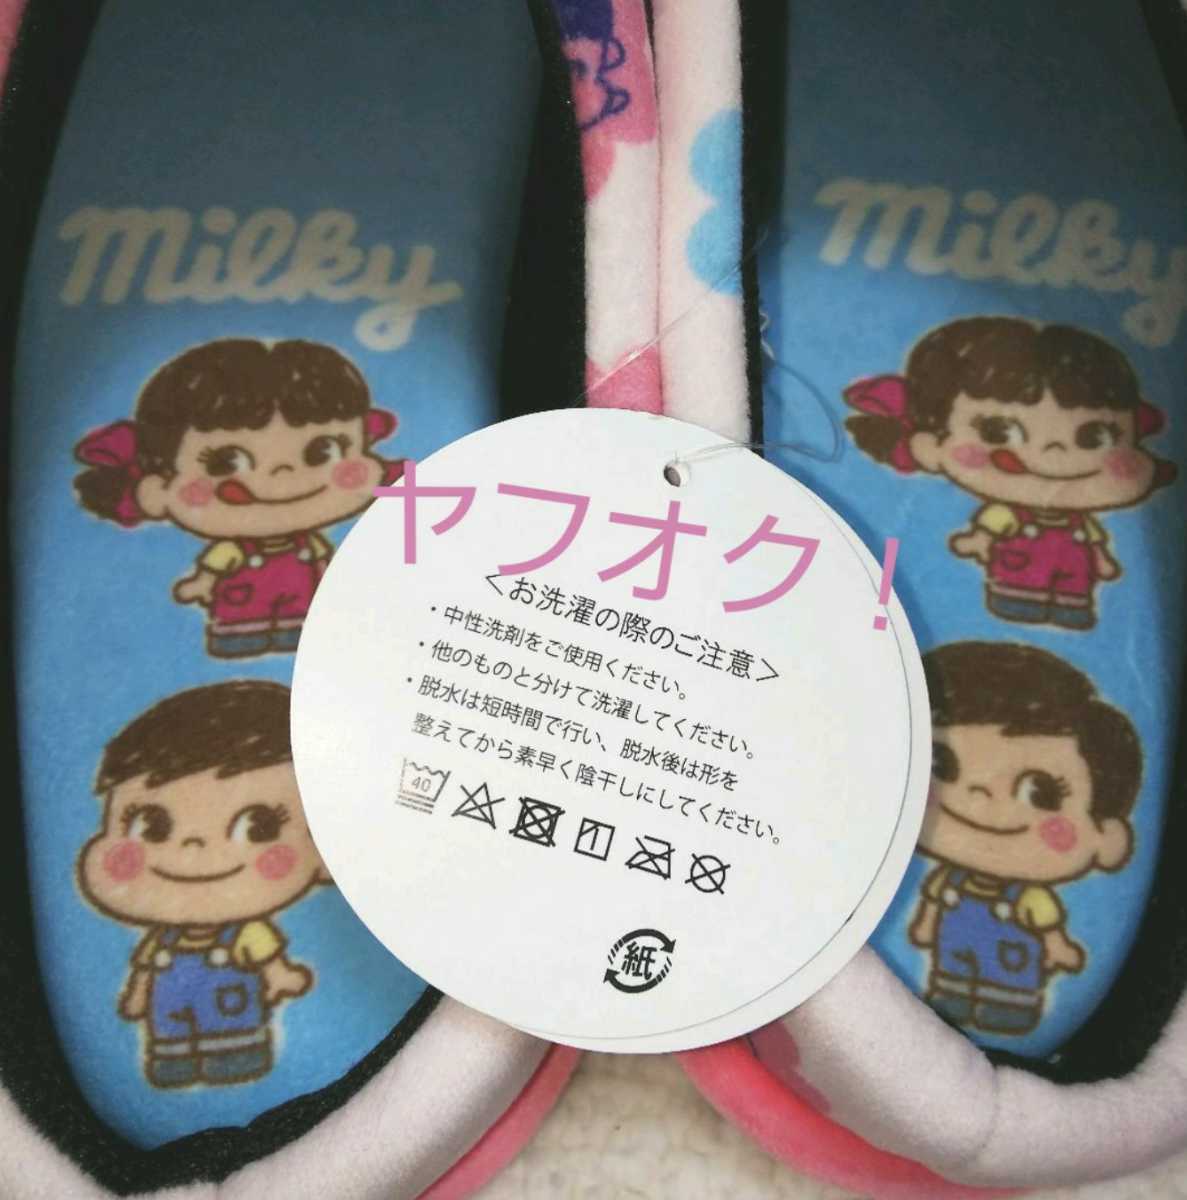  Peko-chan салон обувь Mill ключ рисунок [ новый товар * с биркой ]